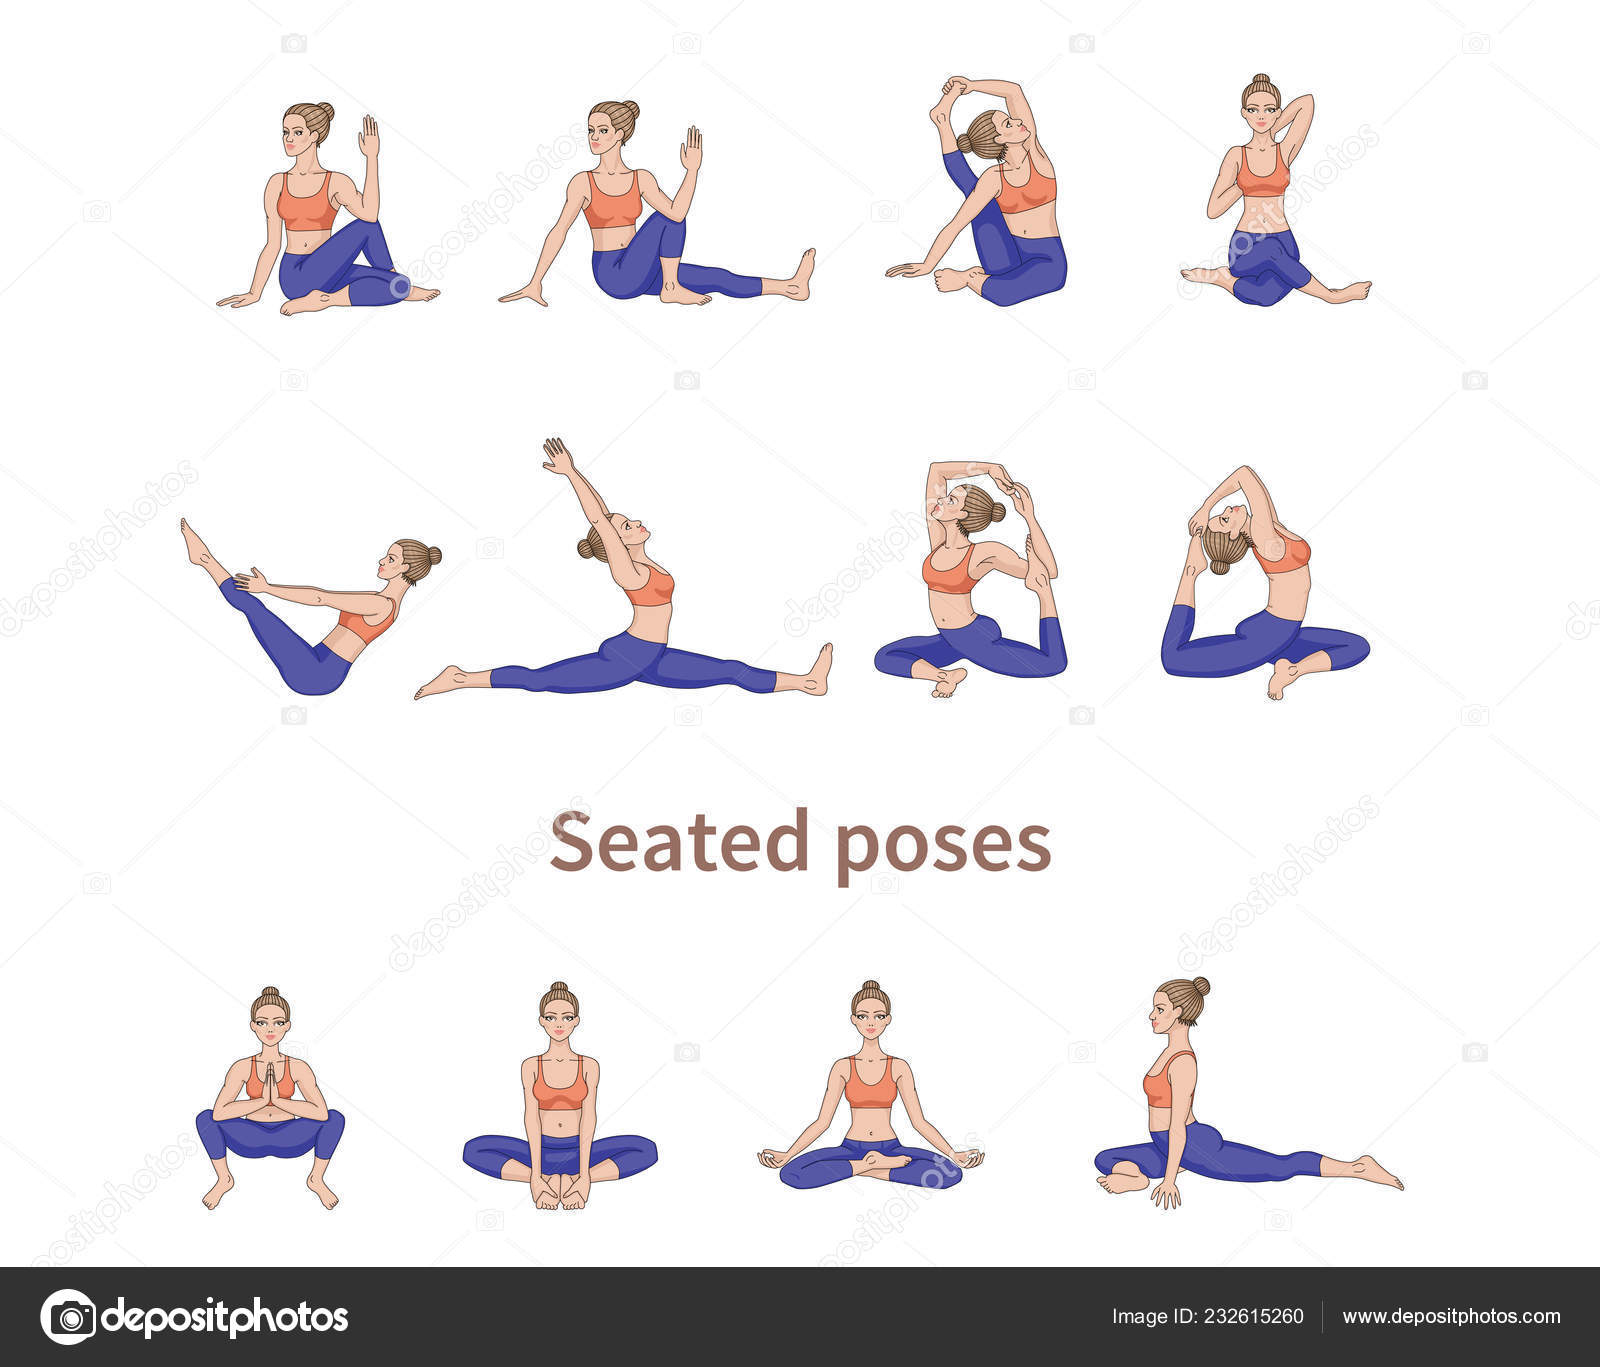 The 15 Best Standing Yoga Poses To Improve Balance & Stability |  mindbodygreen